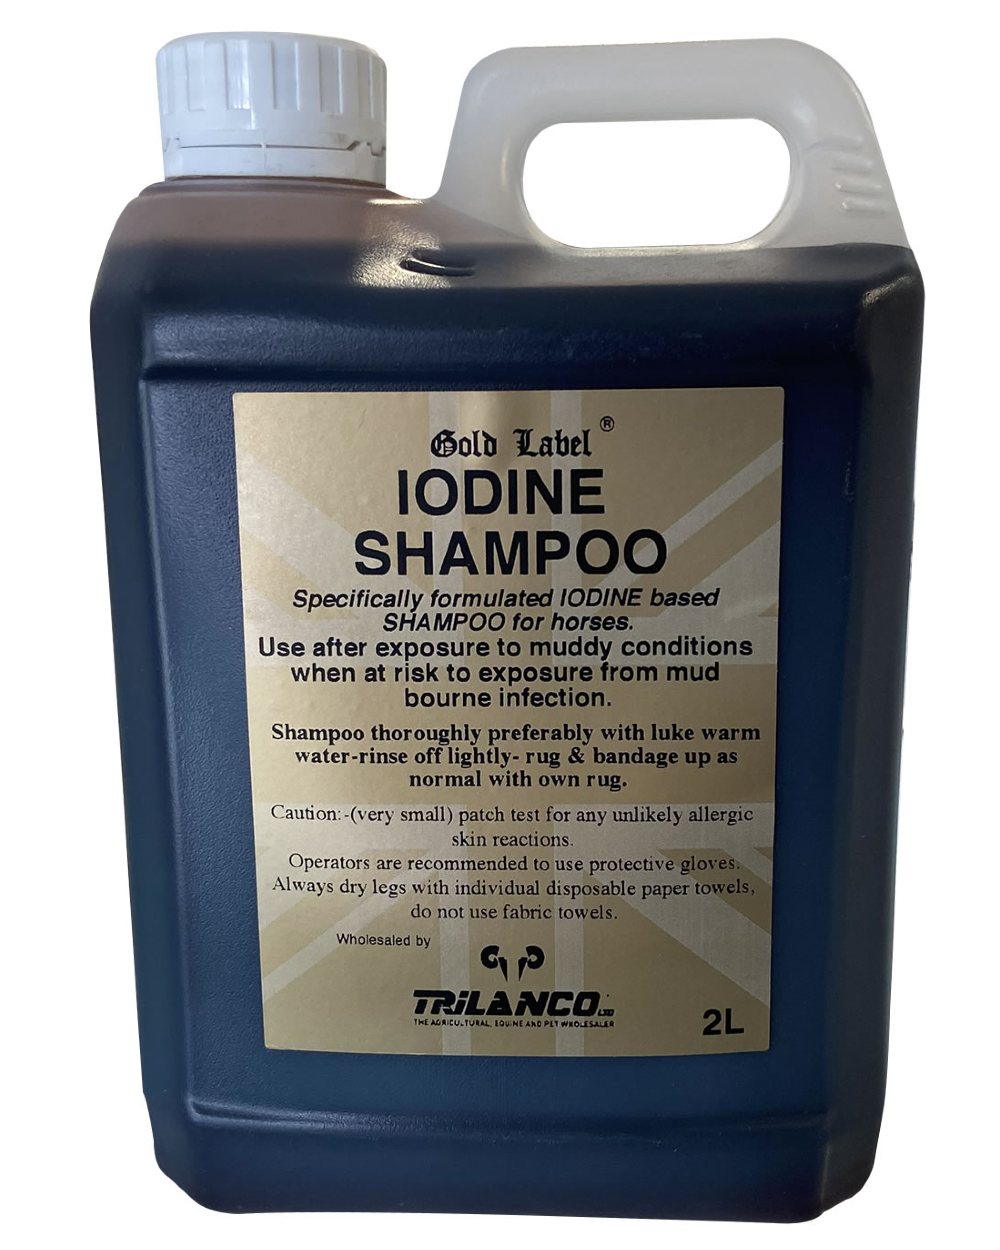 Gold Label Iodine Shampoo On A White Background